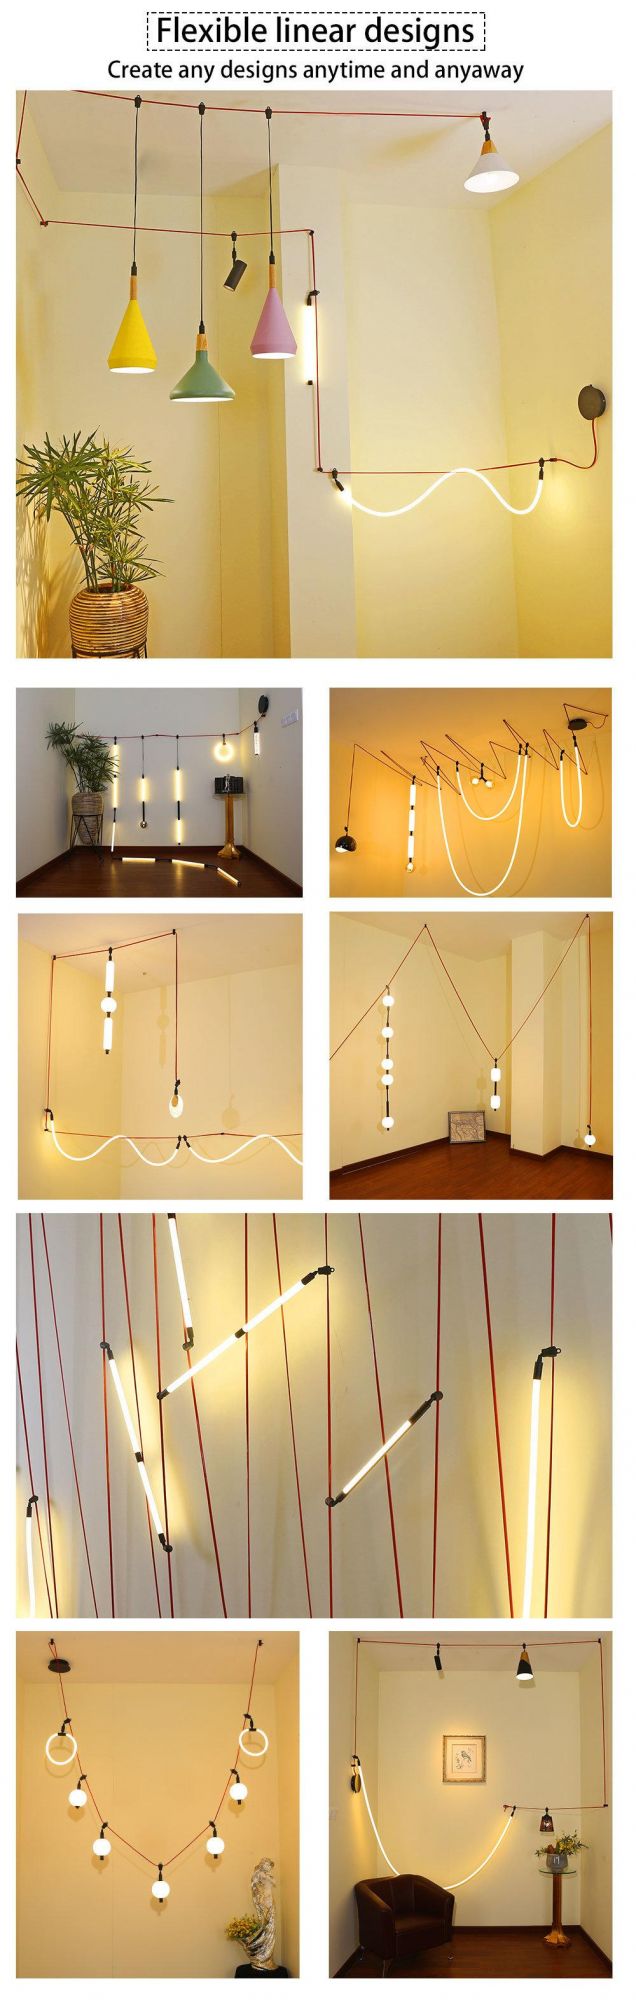 LED Indoor Lights Designer Flexible Linear 3000K/6000K Glass Acrylic Shade Decoration Chandelier Pendant Ceiling Spot Track Lamp Light